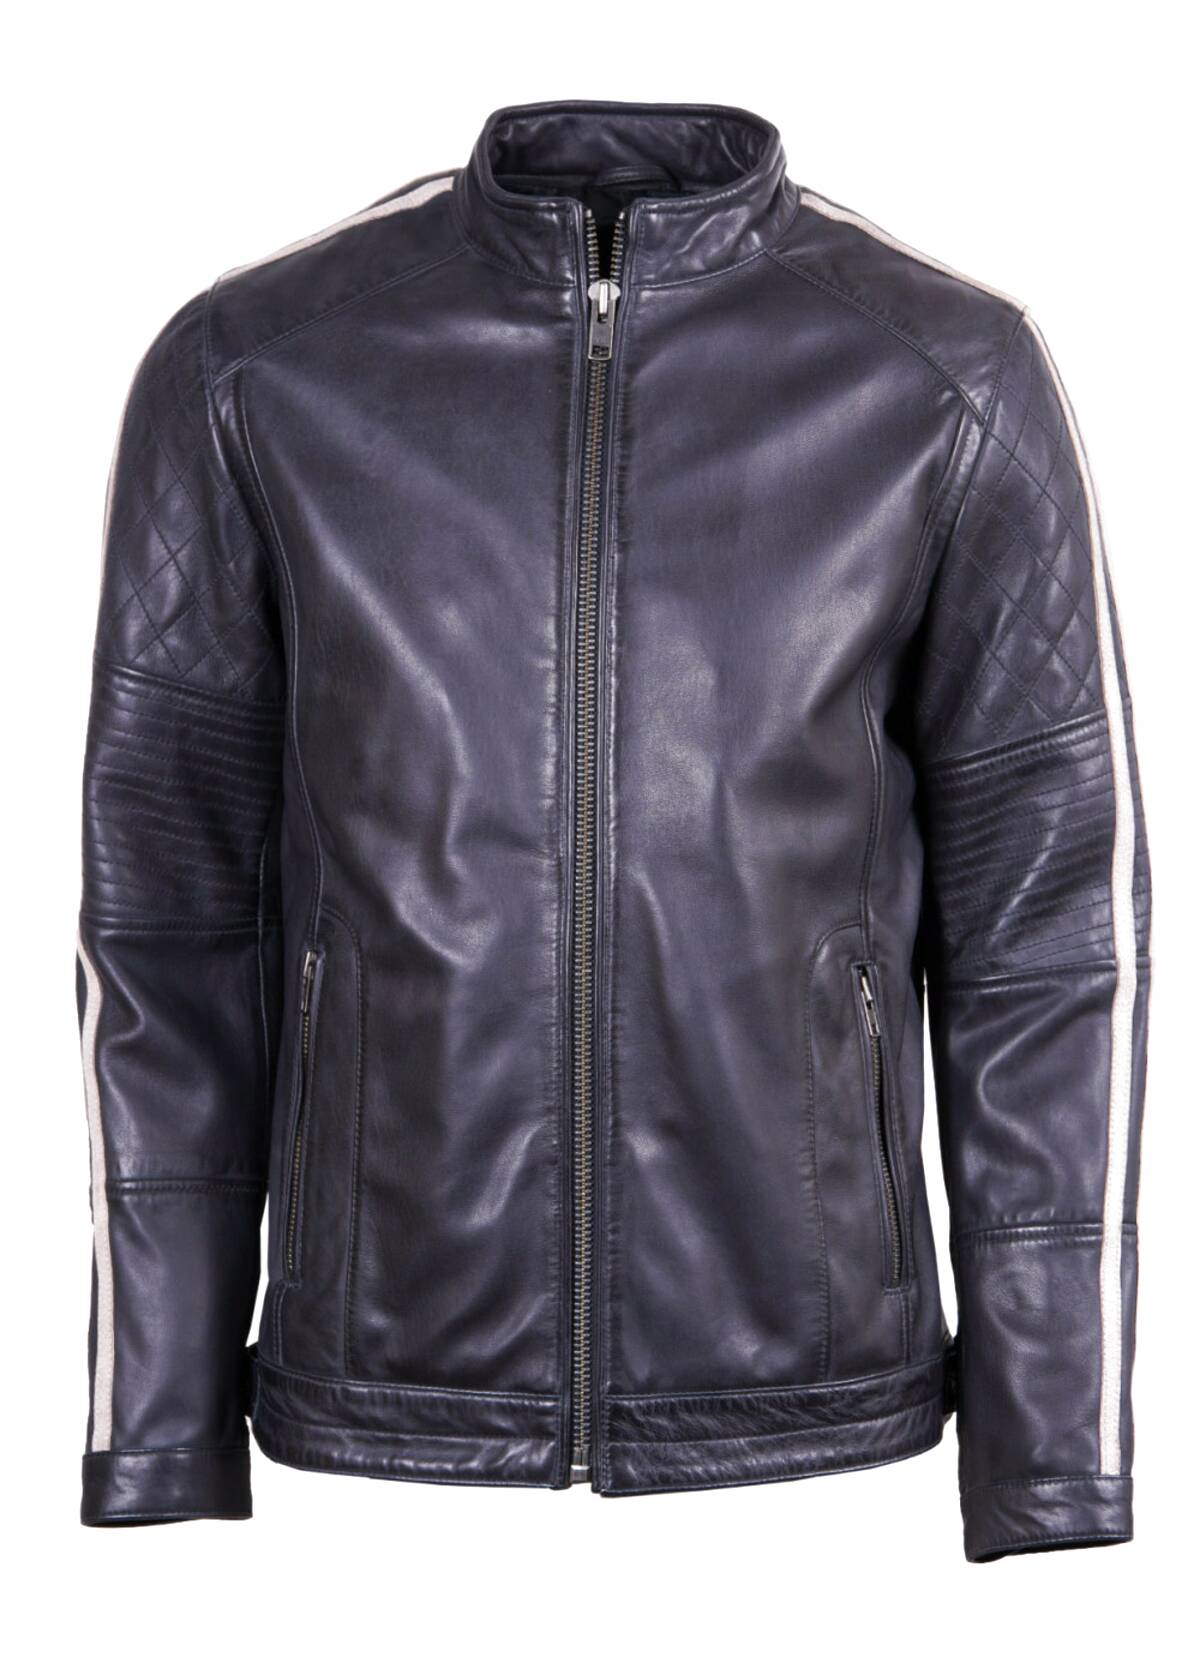 Lakeland Leather Jacket for sale in UK | 88 used Lakeland Leather Jackets